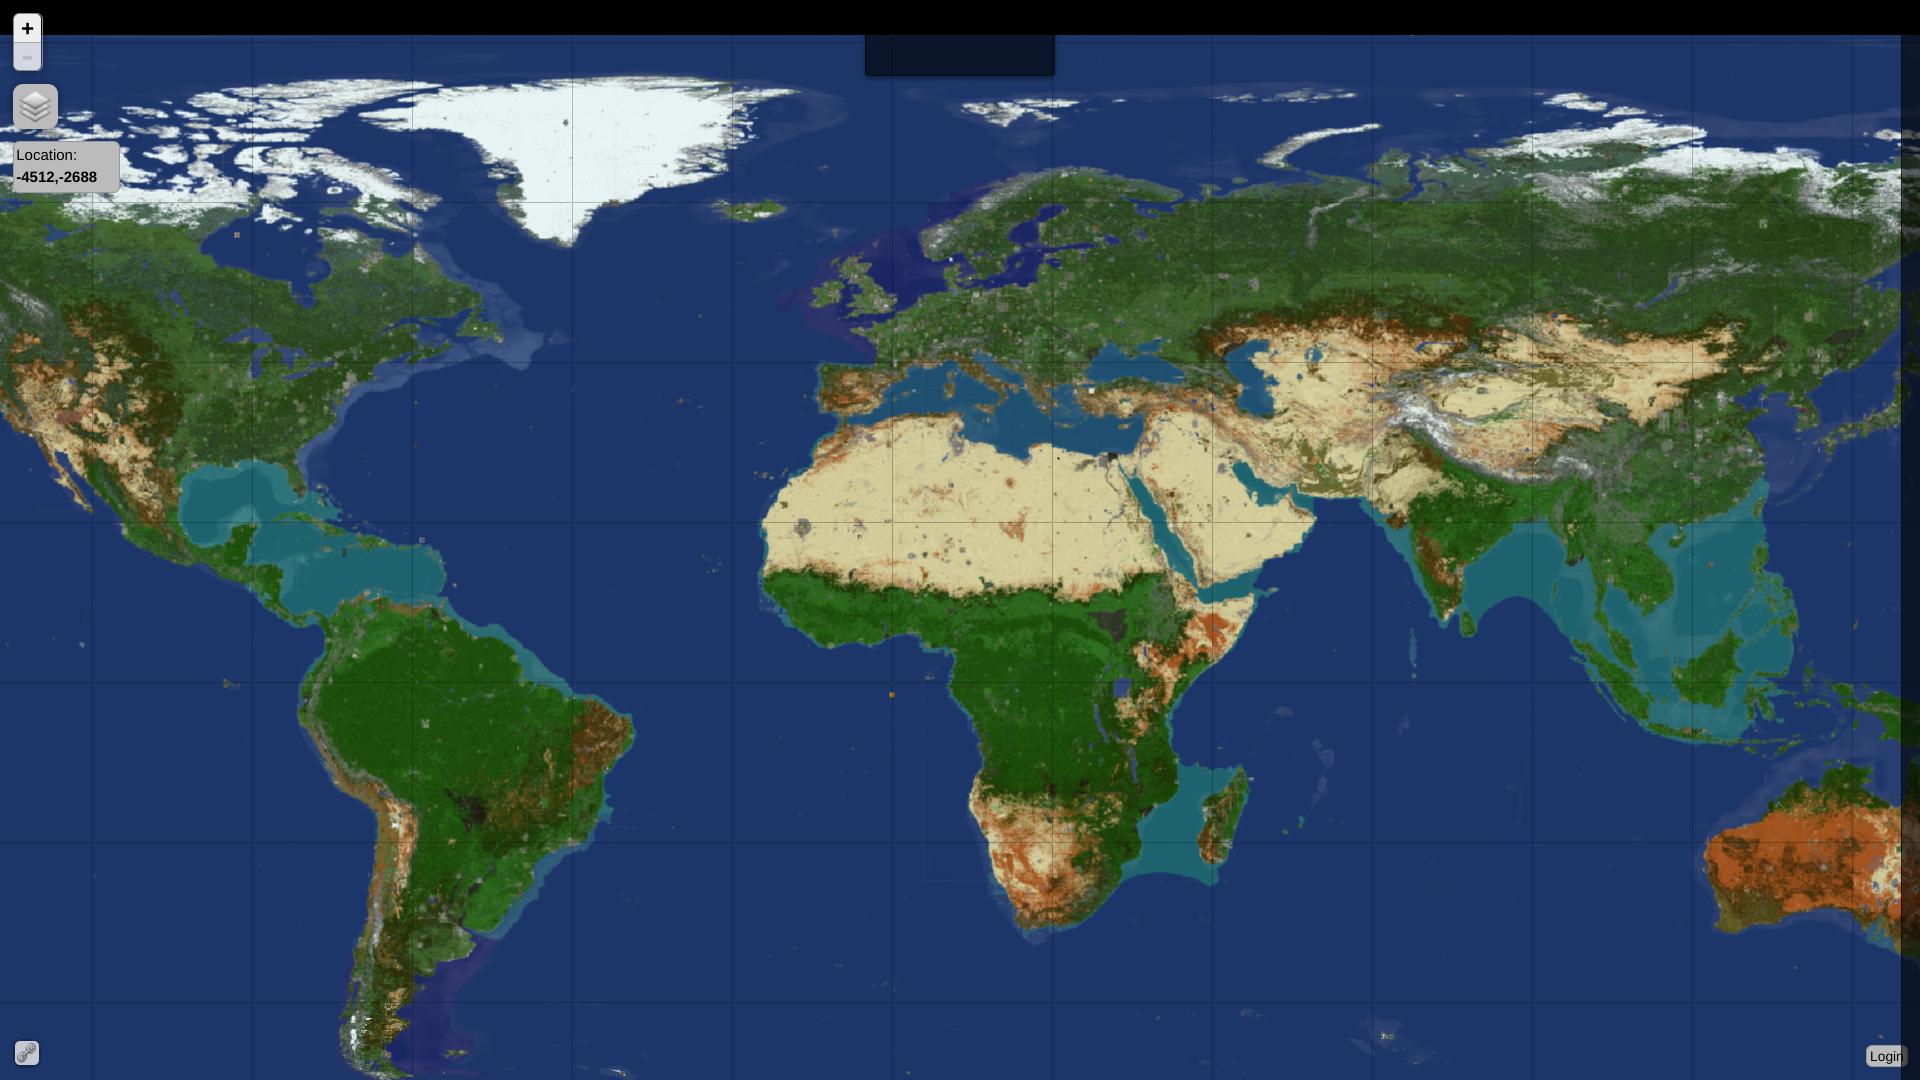 Wondering Maps on X: Map of EarthMC, a Towny minecraft server